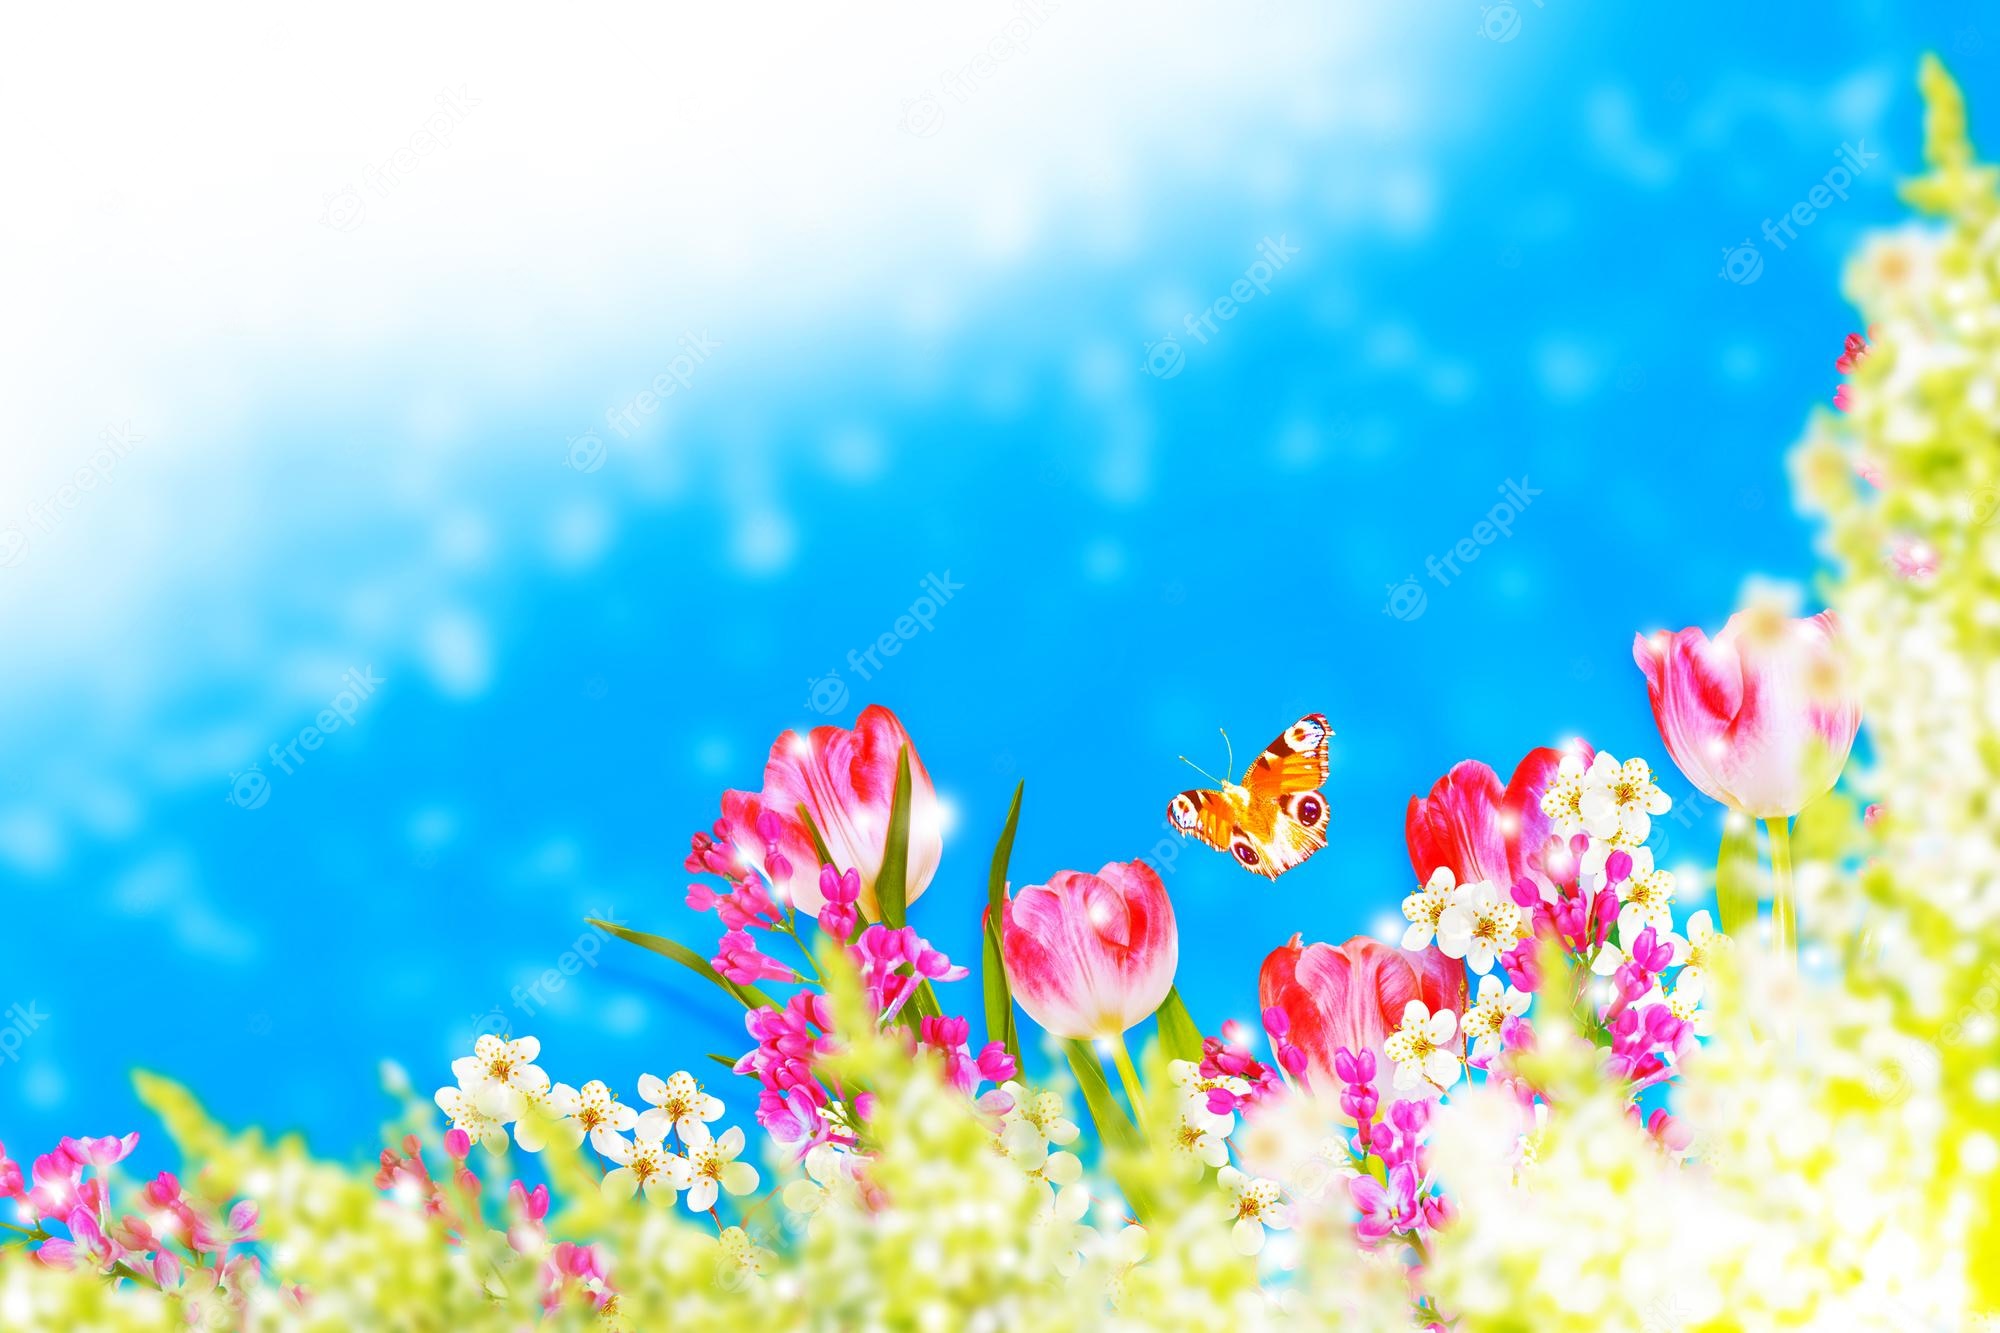 Bright Spring Flowers Image